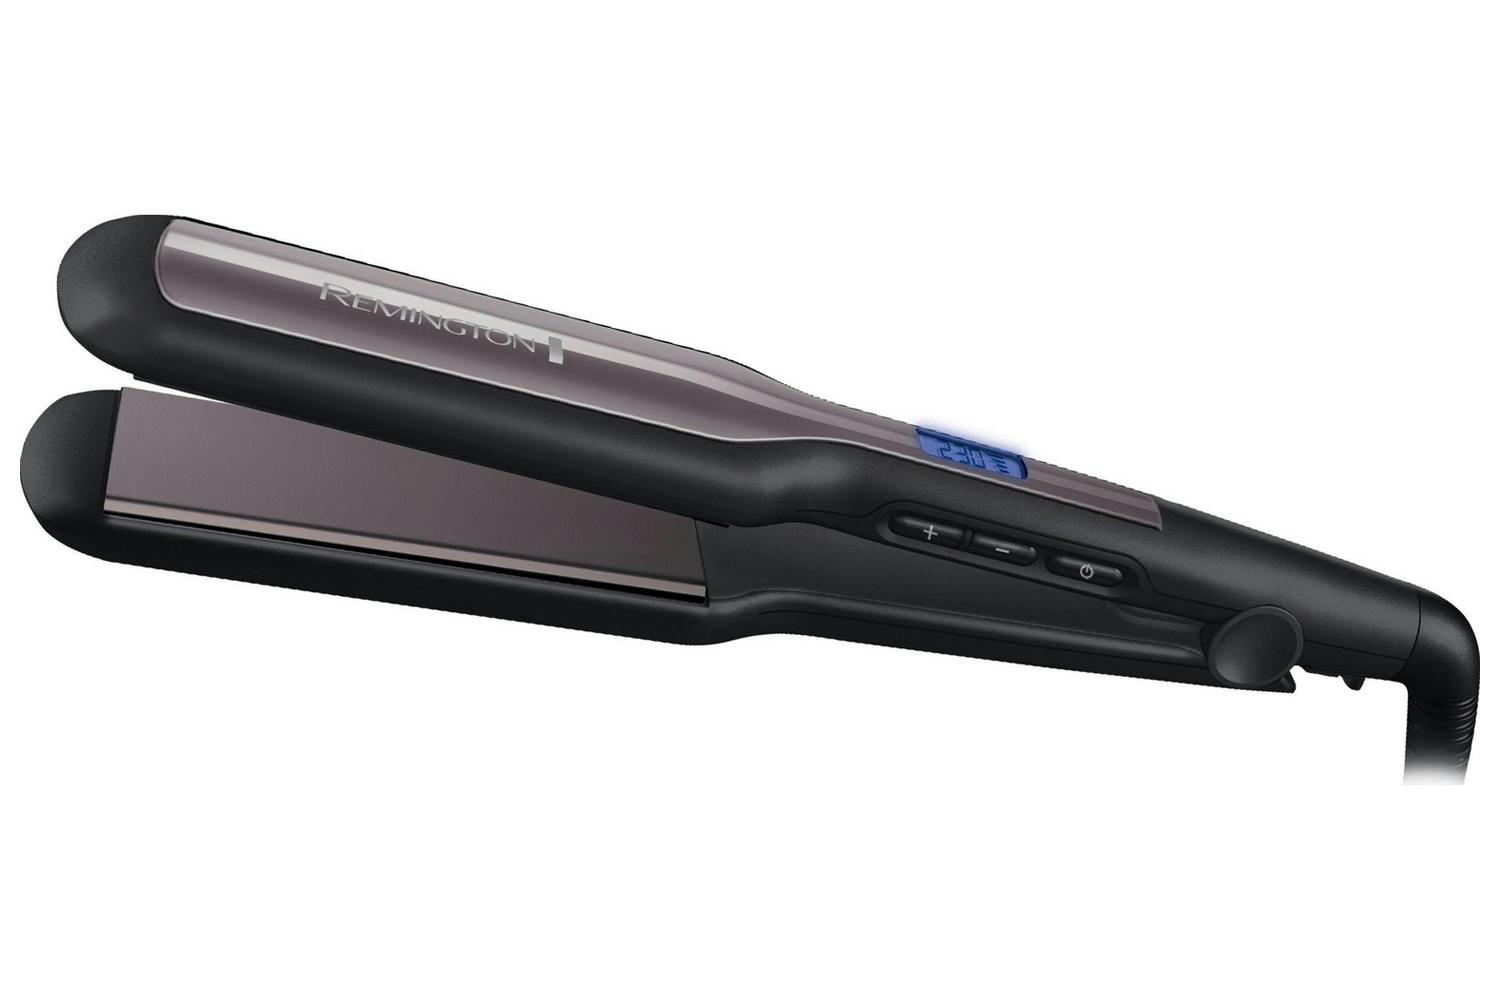 Remington Pro Ceramic Extra Hair Straightener | S5525 | Black/Grey